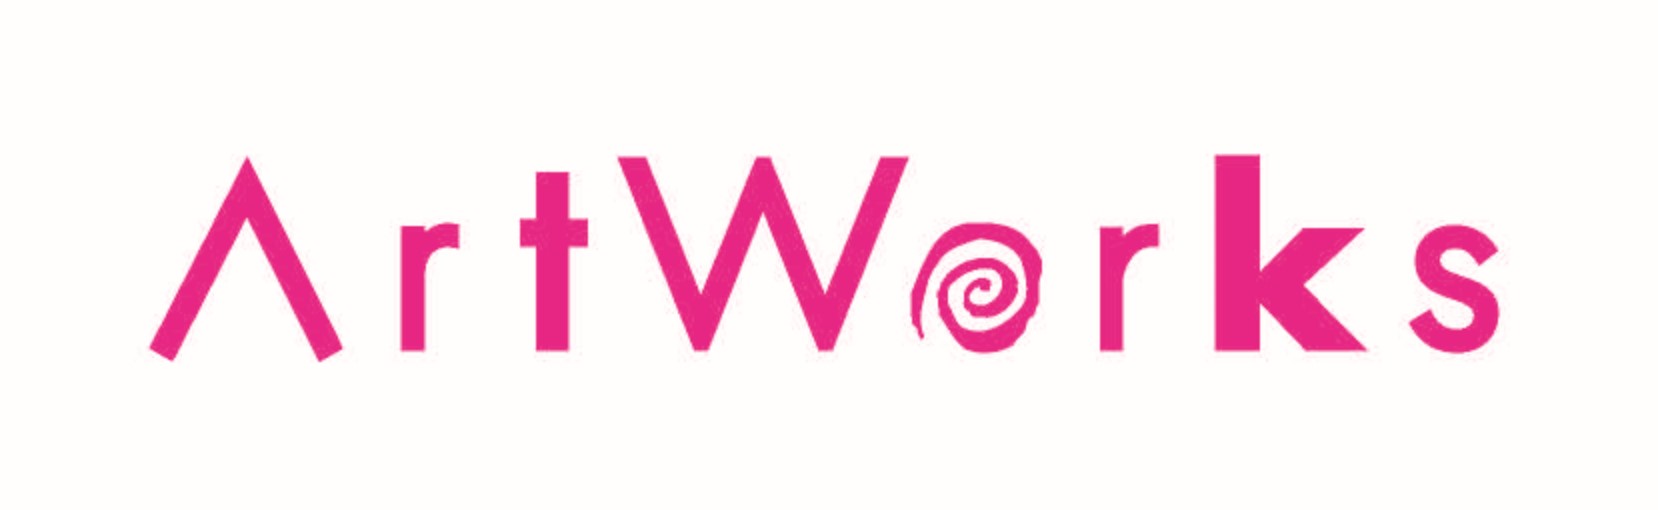 ArtWorks logo